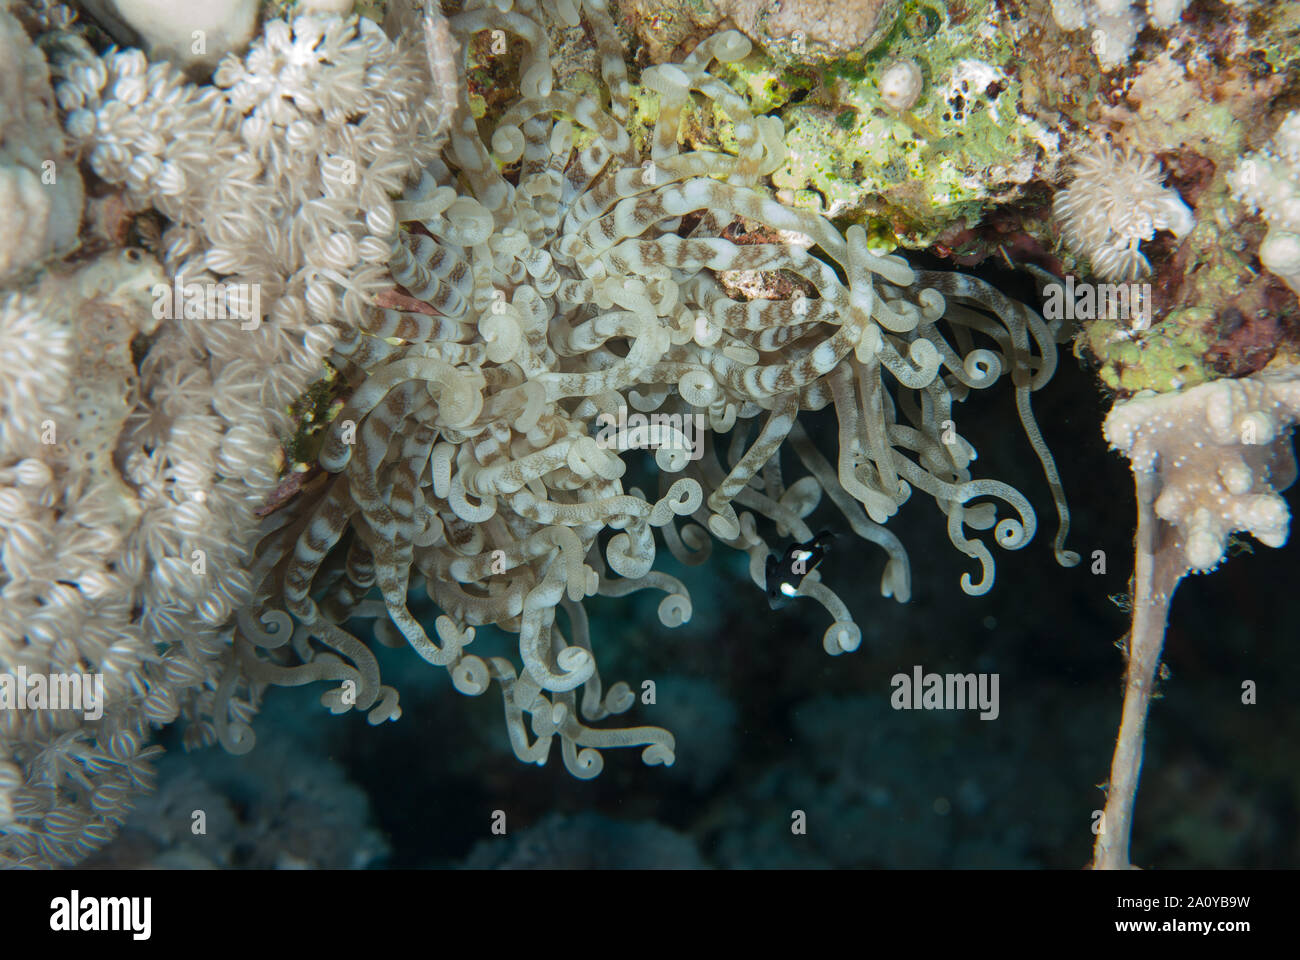 Beaded anemone, Heteractis aurora, Stichodactylidae, Sharm el Sheikh Red Sea, Egypt Stock Photo